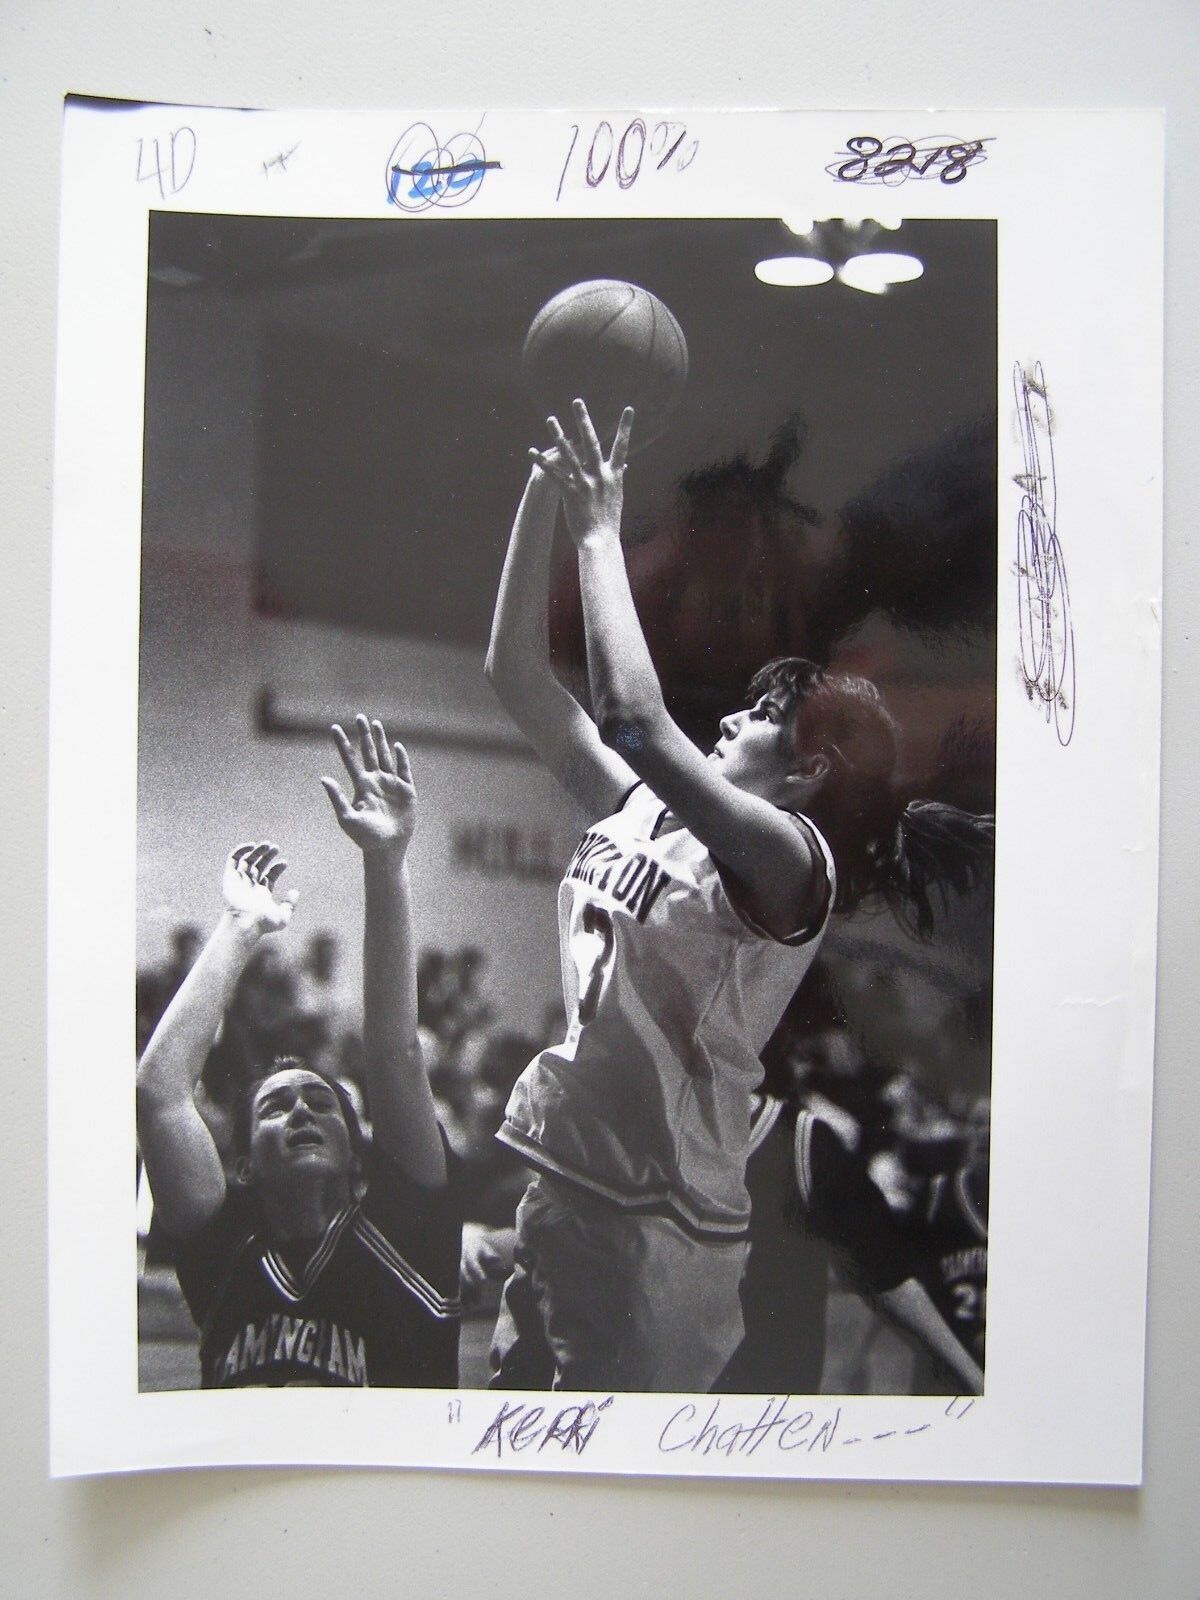 Glossy Press Photo Hopkinton Ma Basketball Kerri Chatten Throws B-ball 1990's